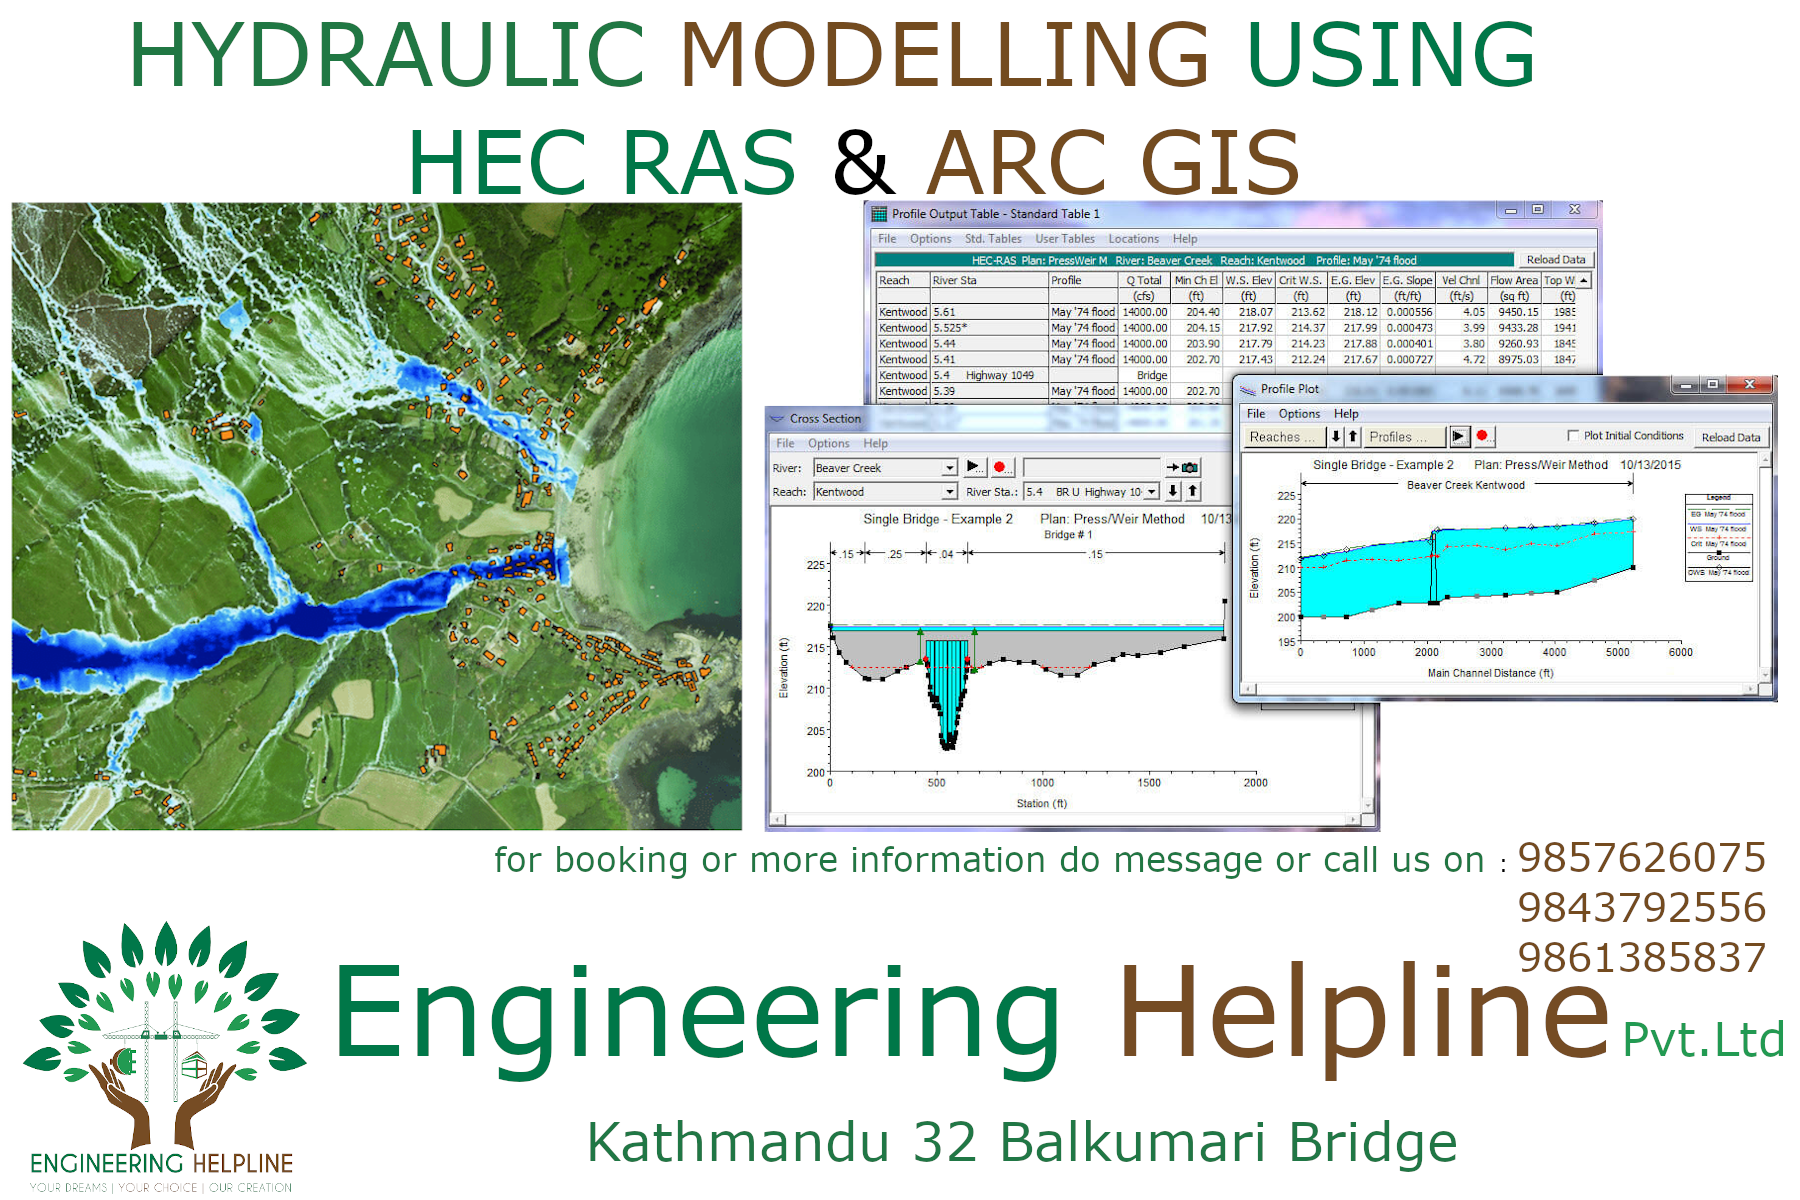 Hydraulic modeling using HEC RAS & Arc GIS